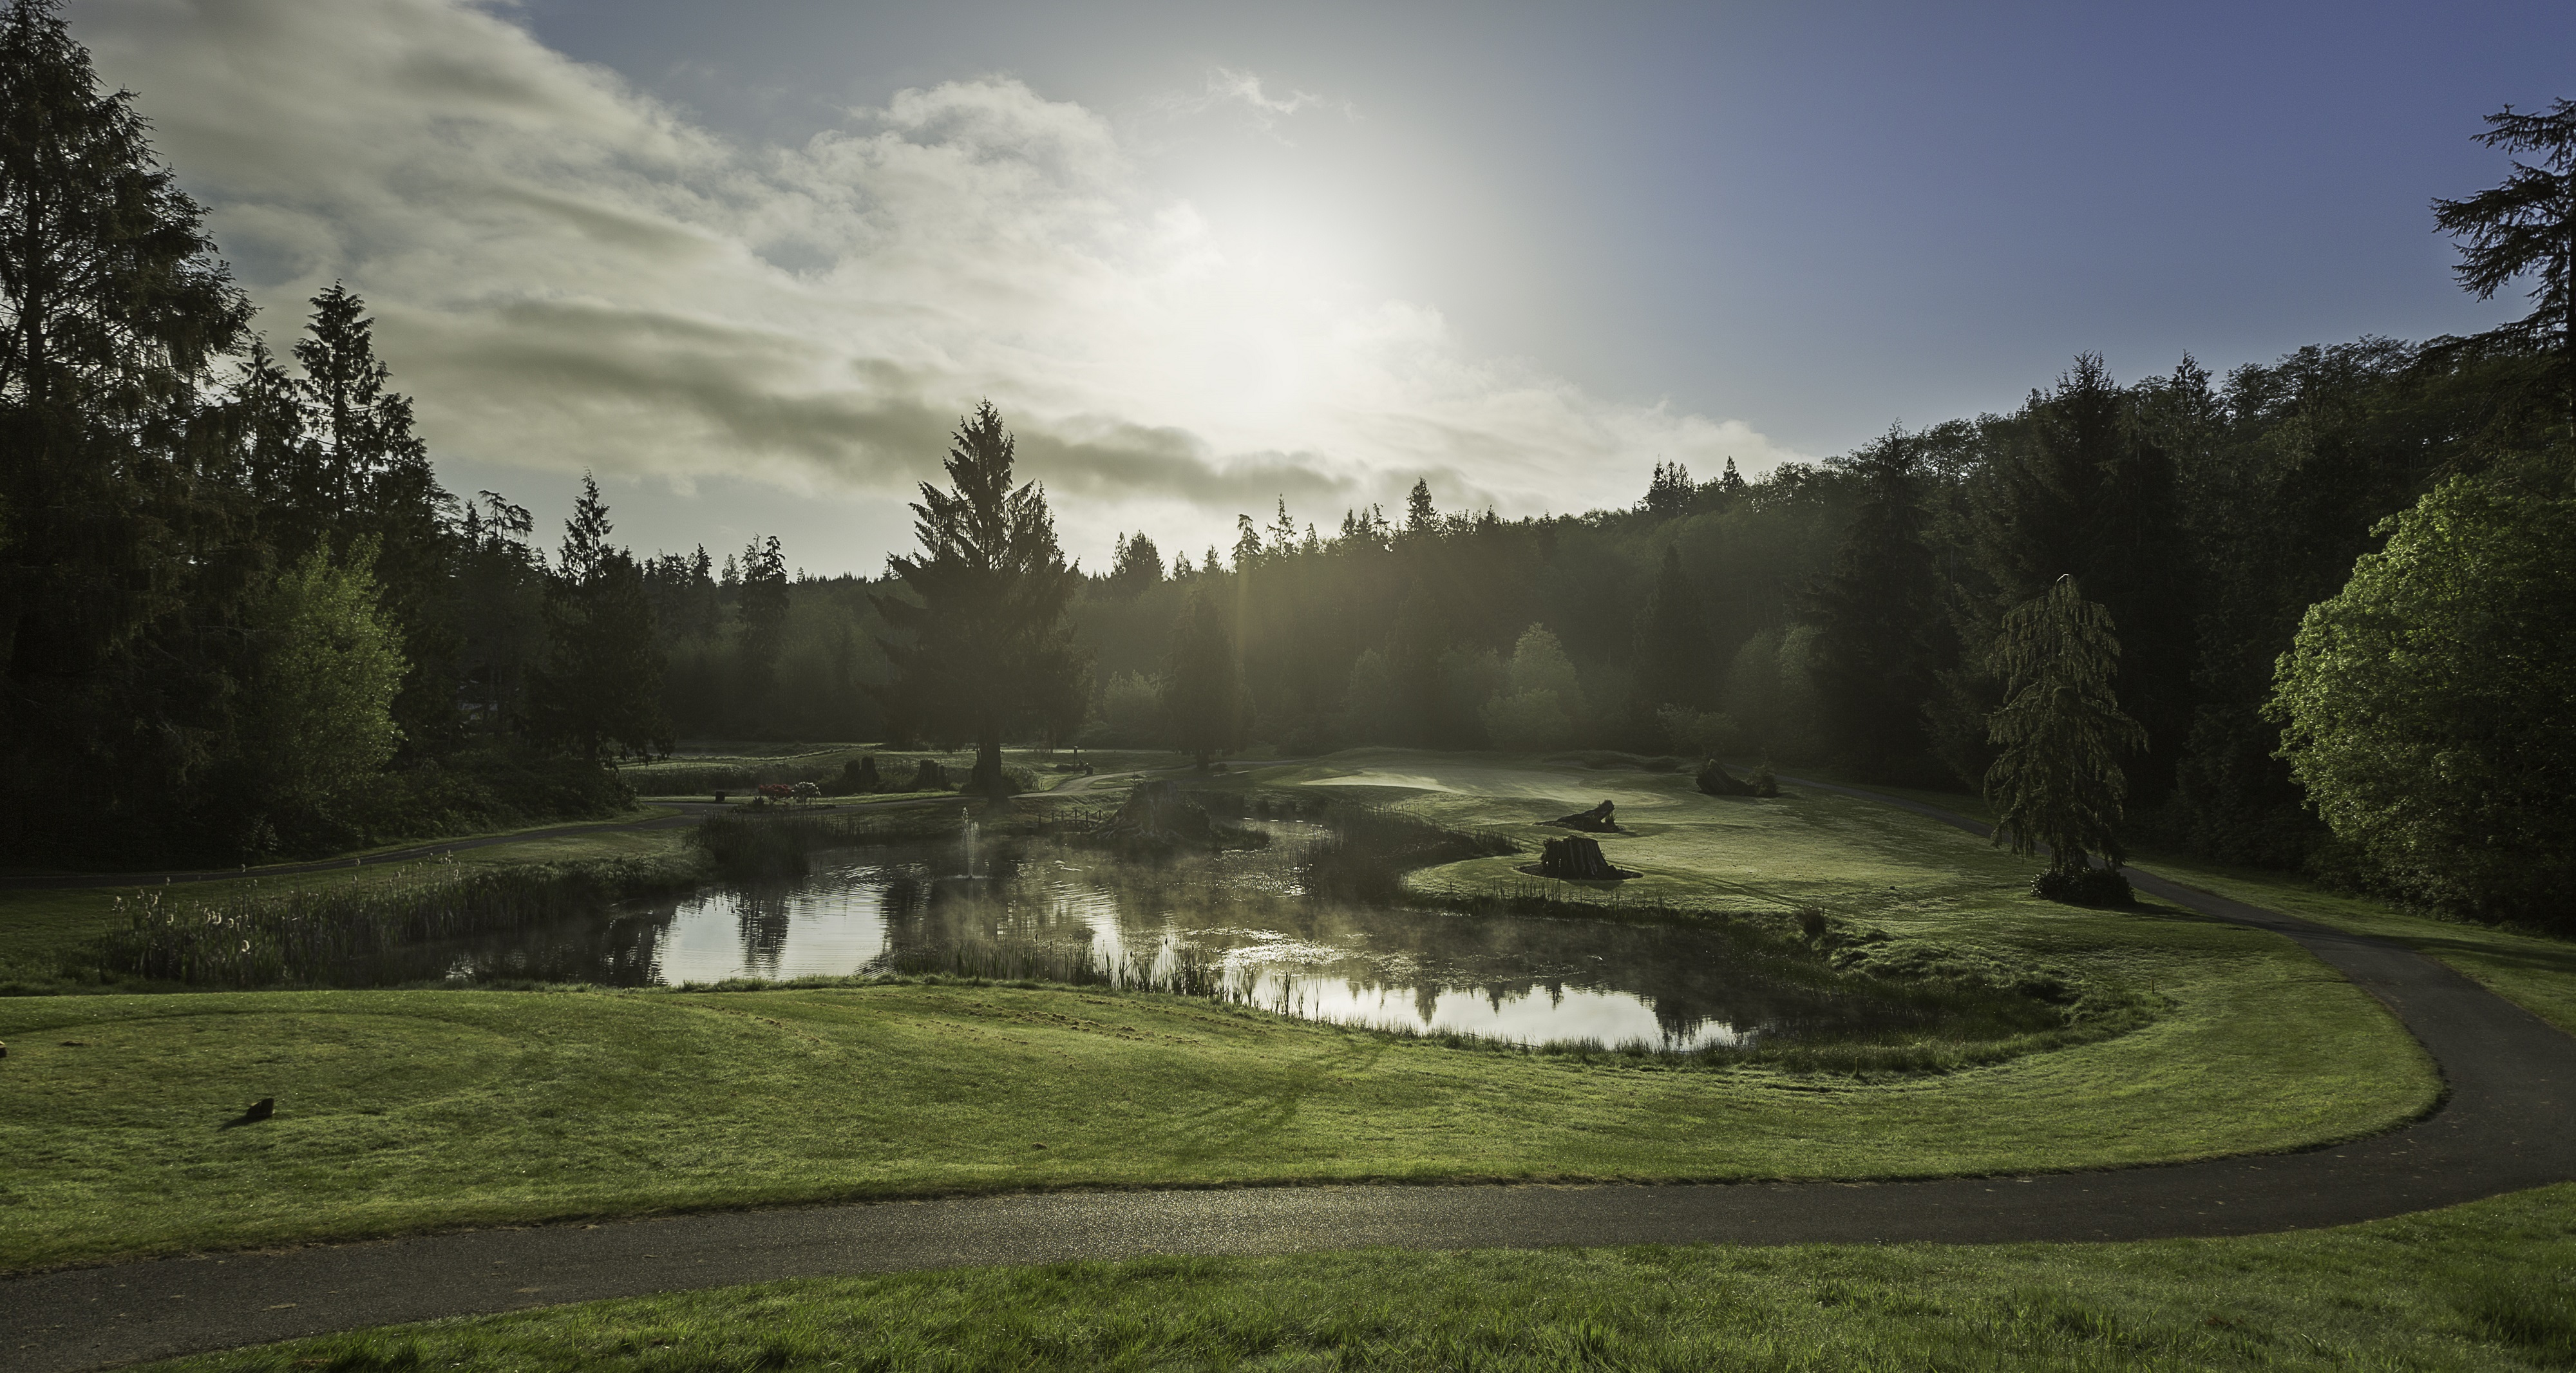   
																Port Ludlow Golf Club Restoring Course to its Original Vision 
															 